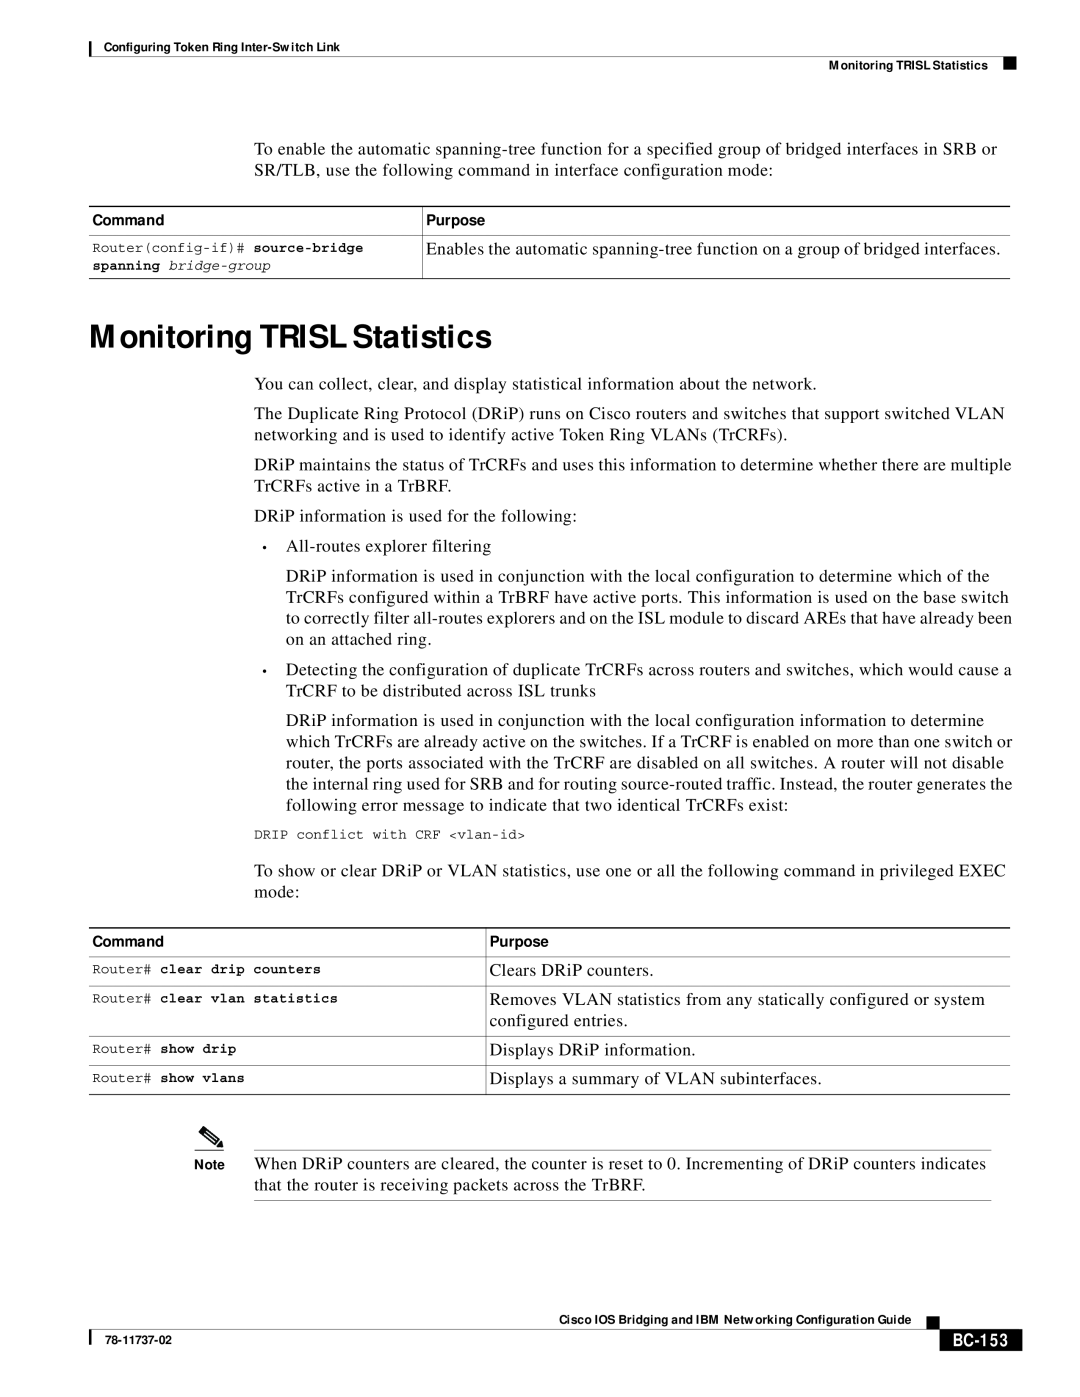 Cisco Systems BC-145 manual Monitoring TRISL Statistics, BC-153, Command, Purpose 